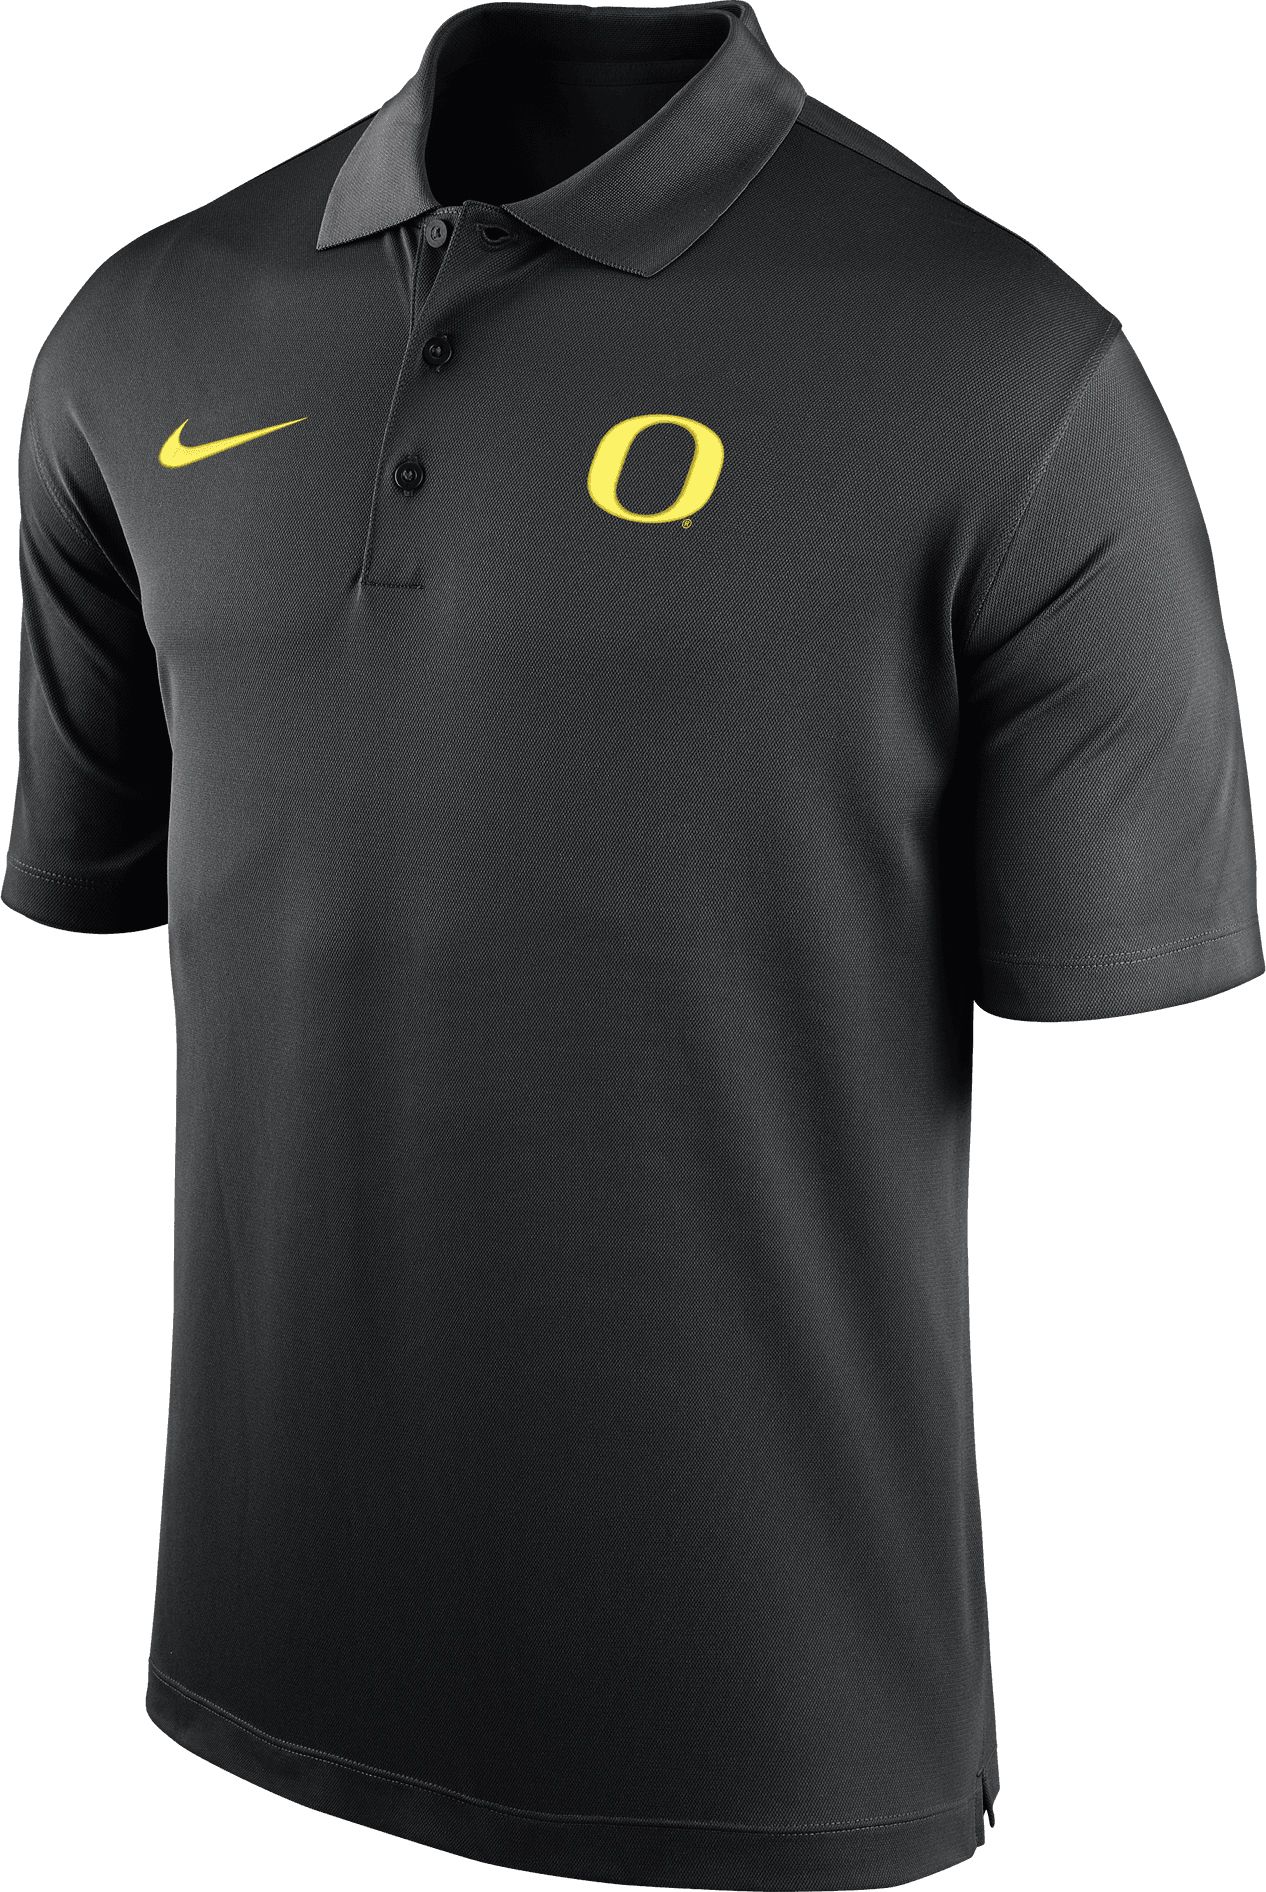 Nike Men's Oregon Ducks Black Dri-FIT Woven Polo